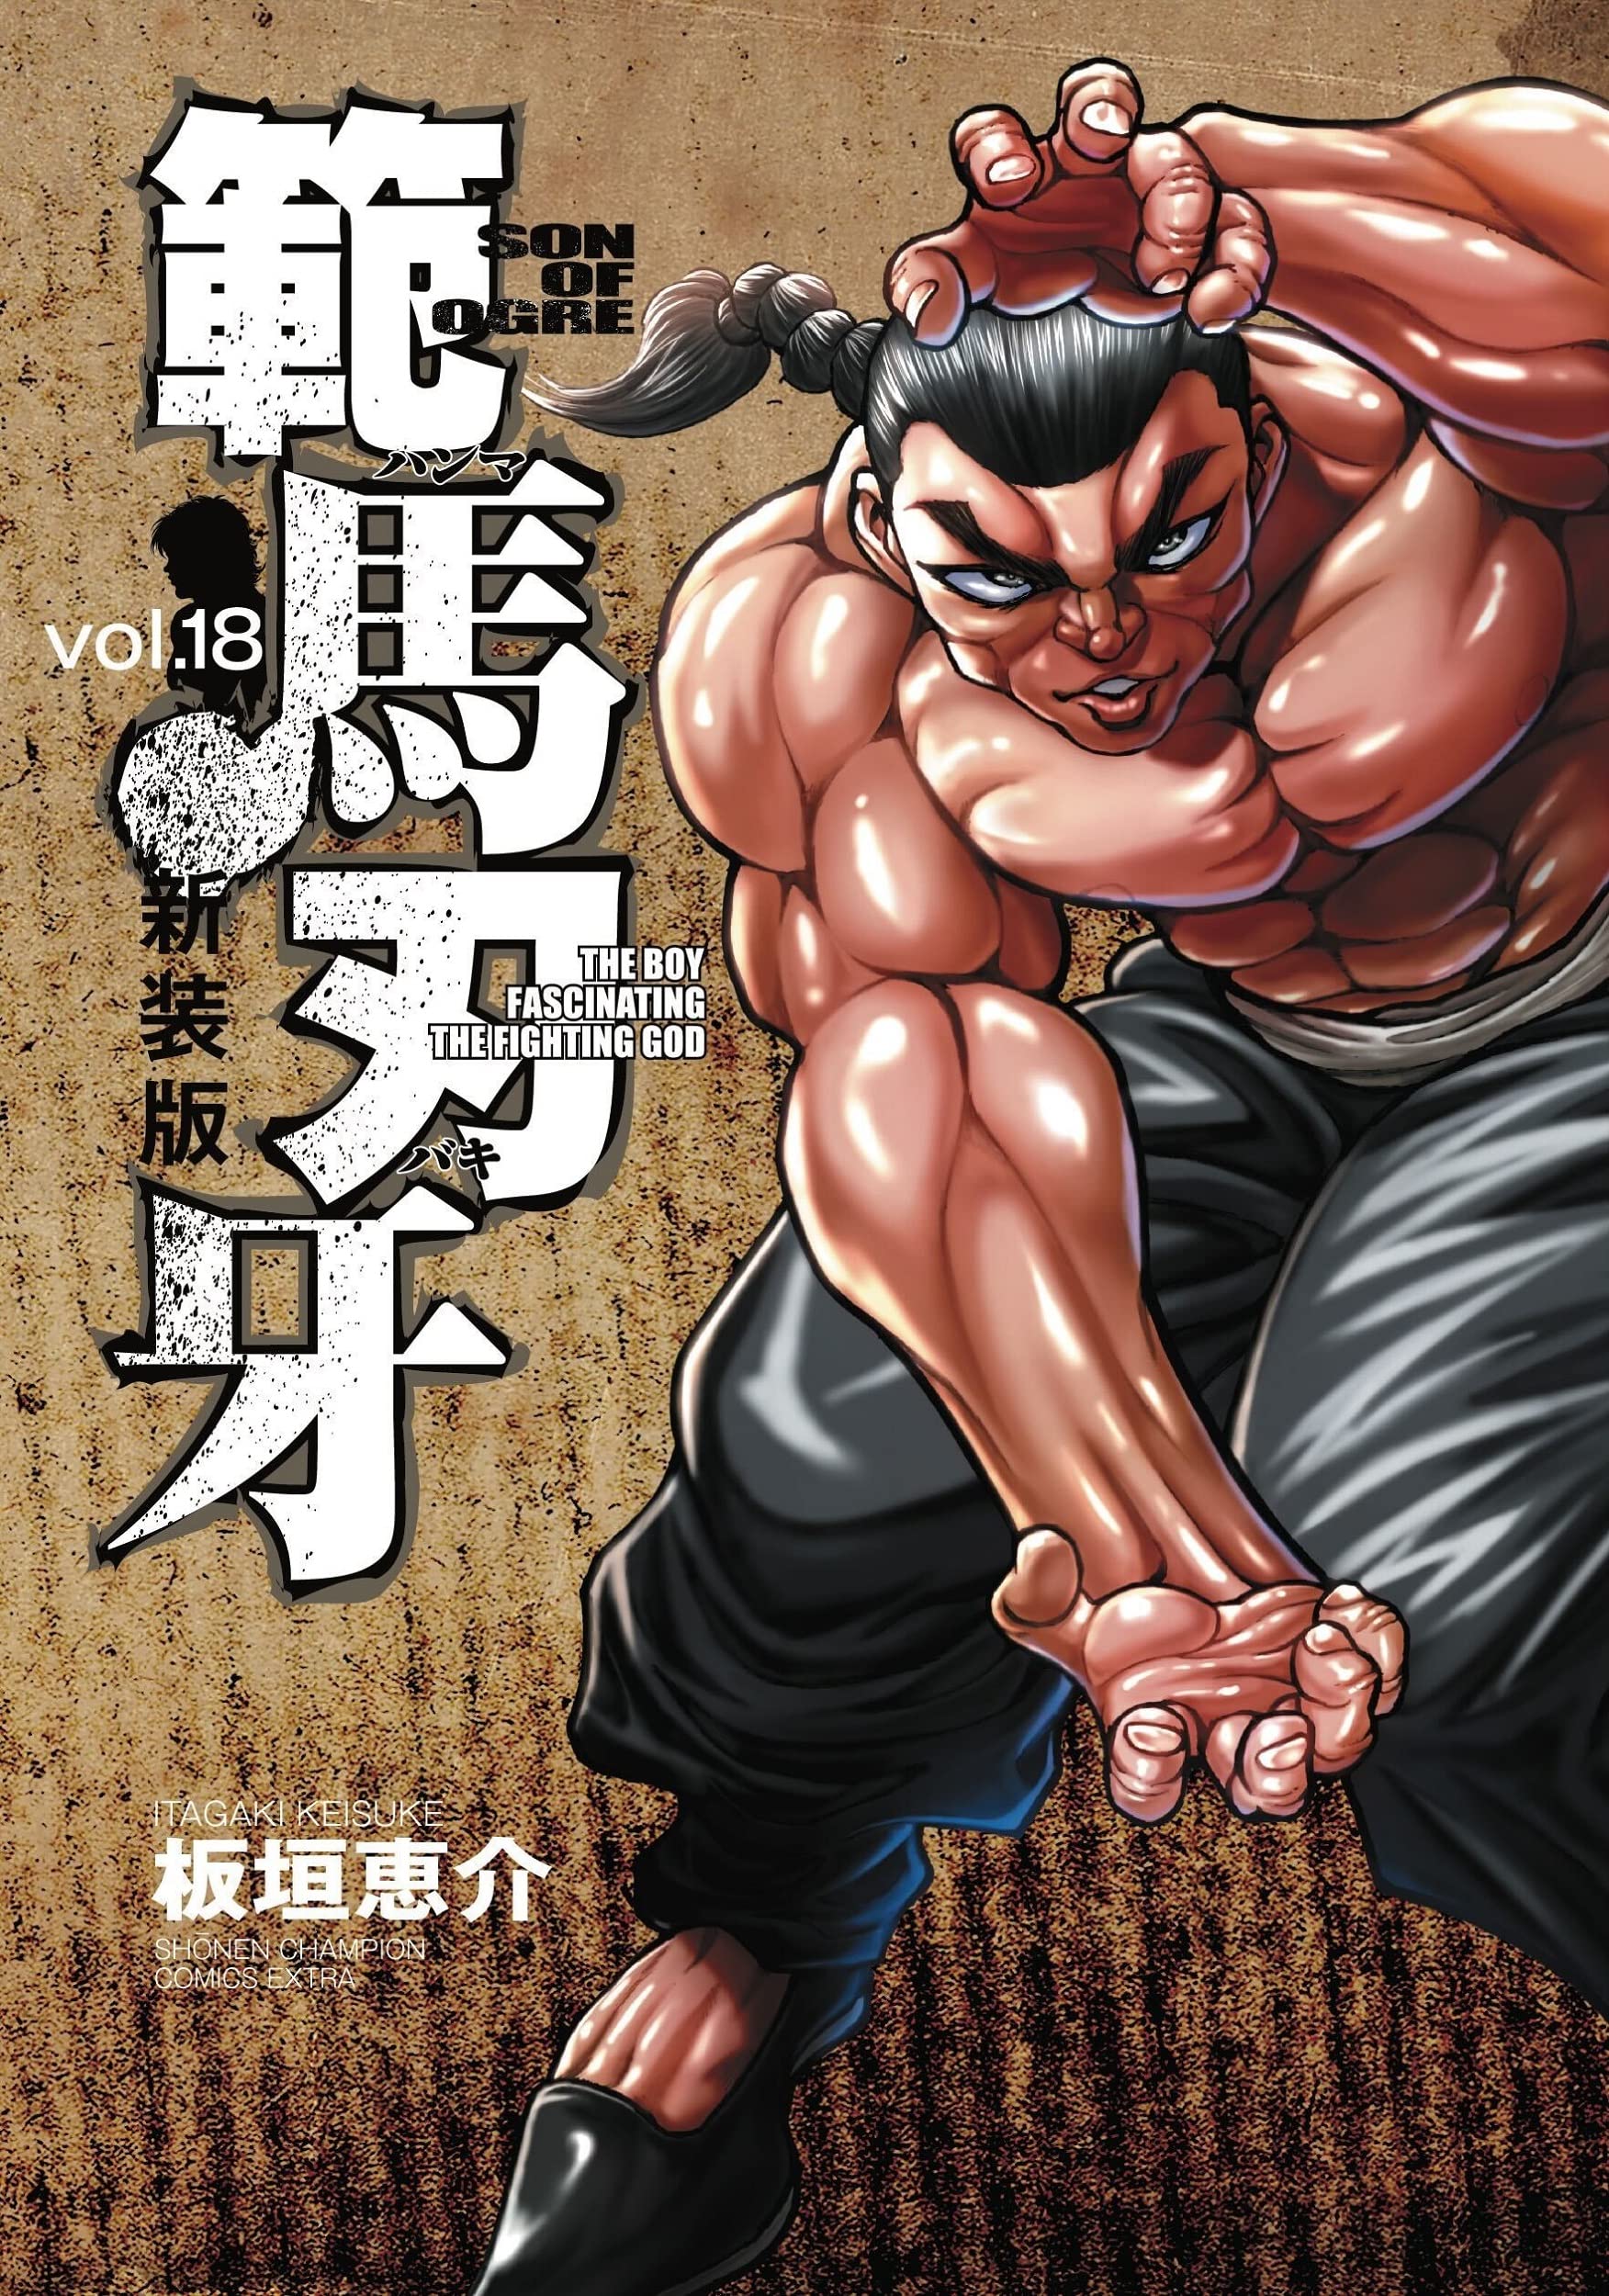 New Edition Hanma Baki: Son of Ogre 18 – Japanese Book Store